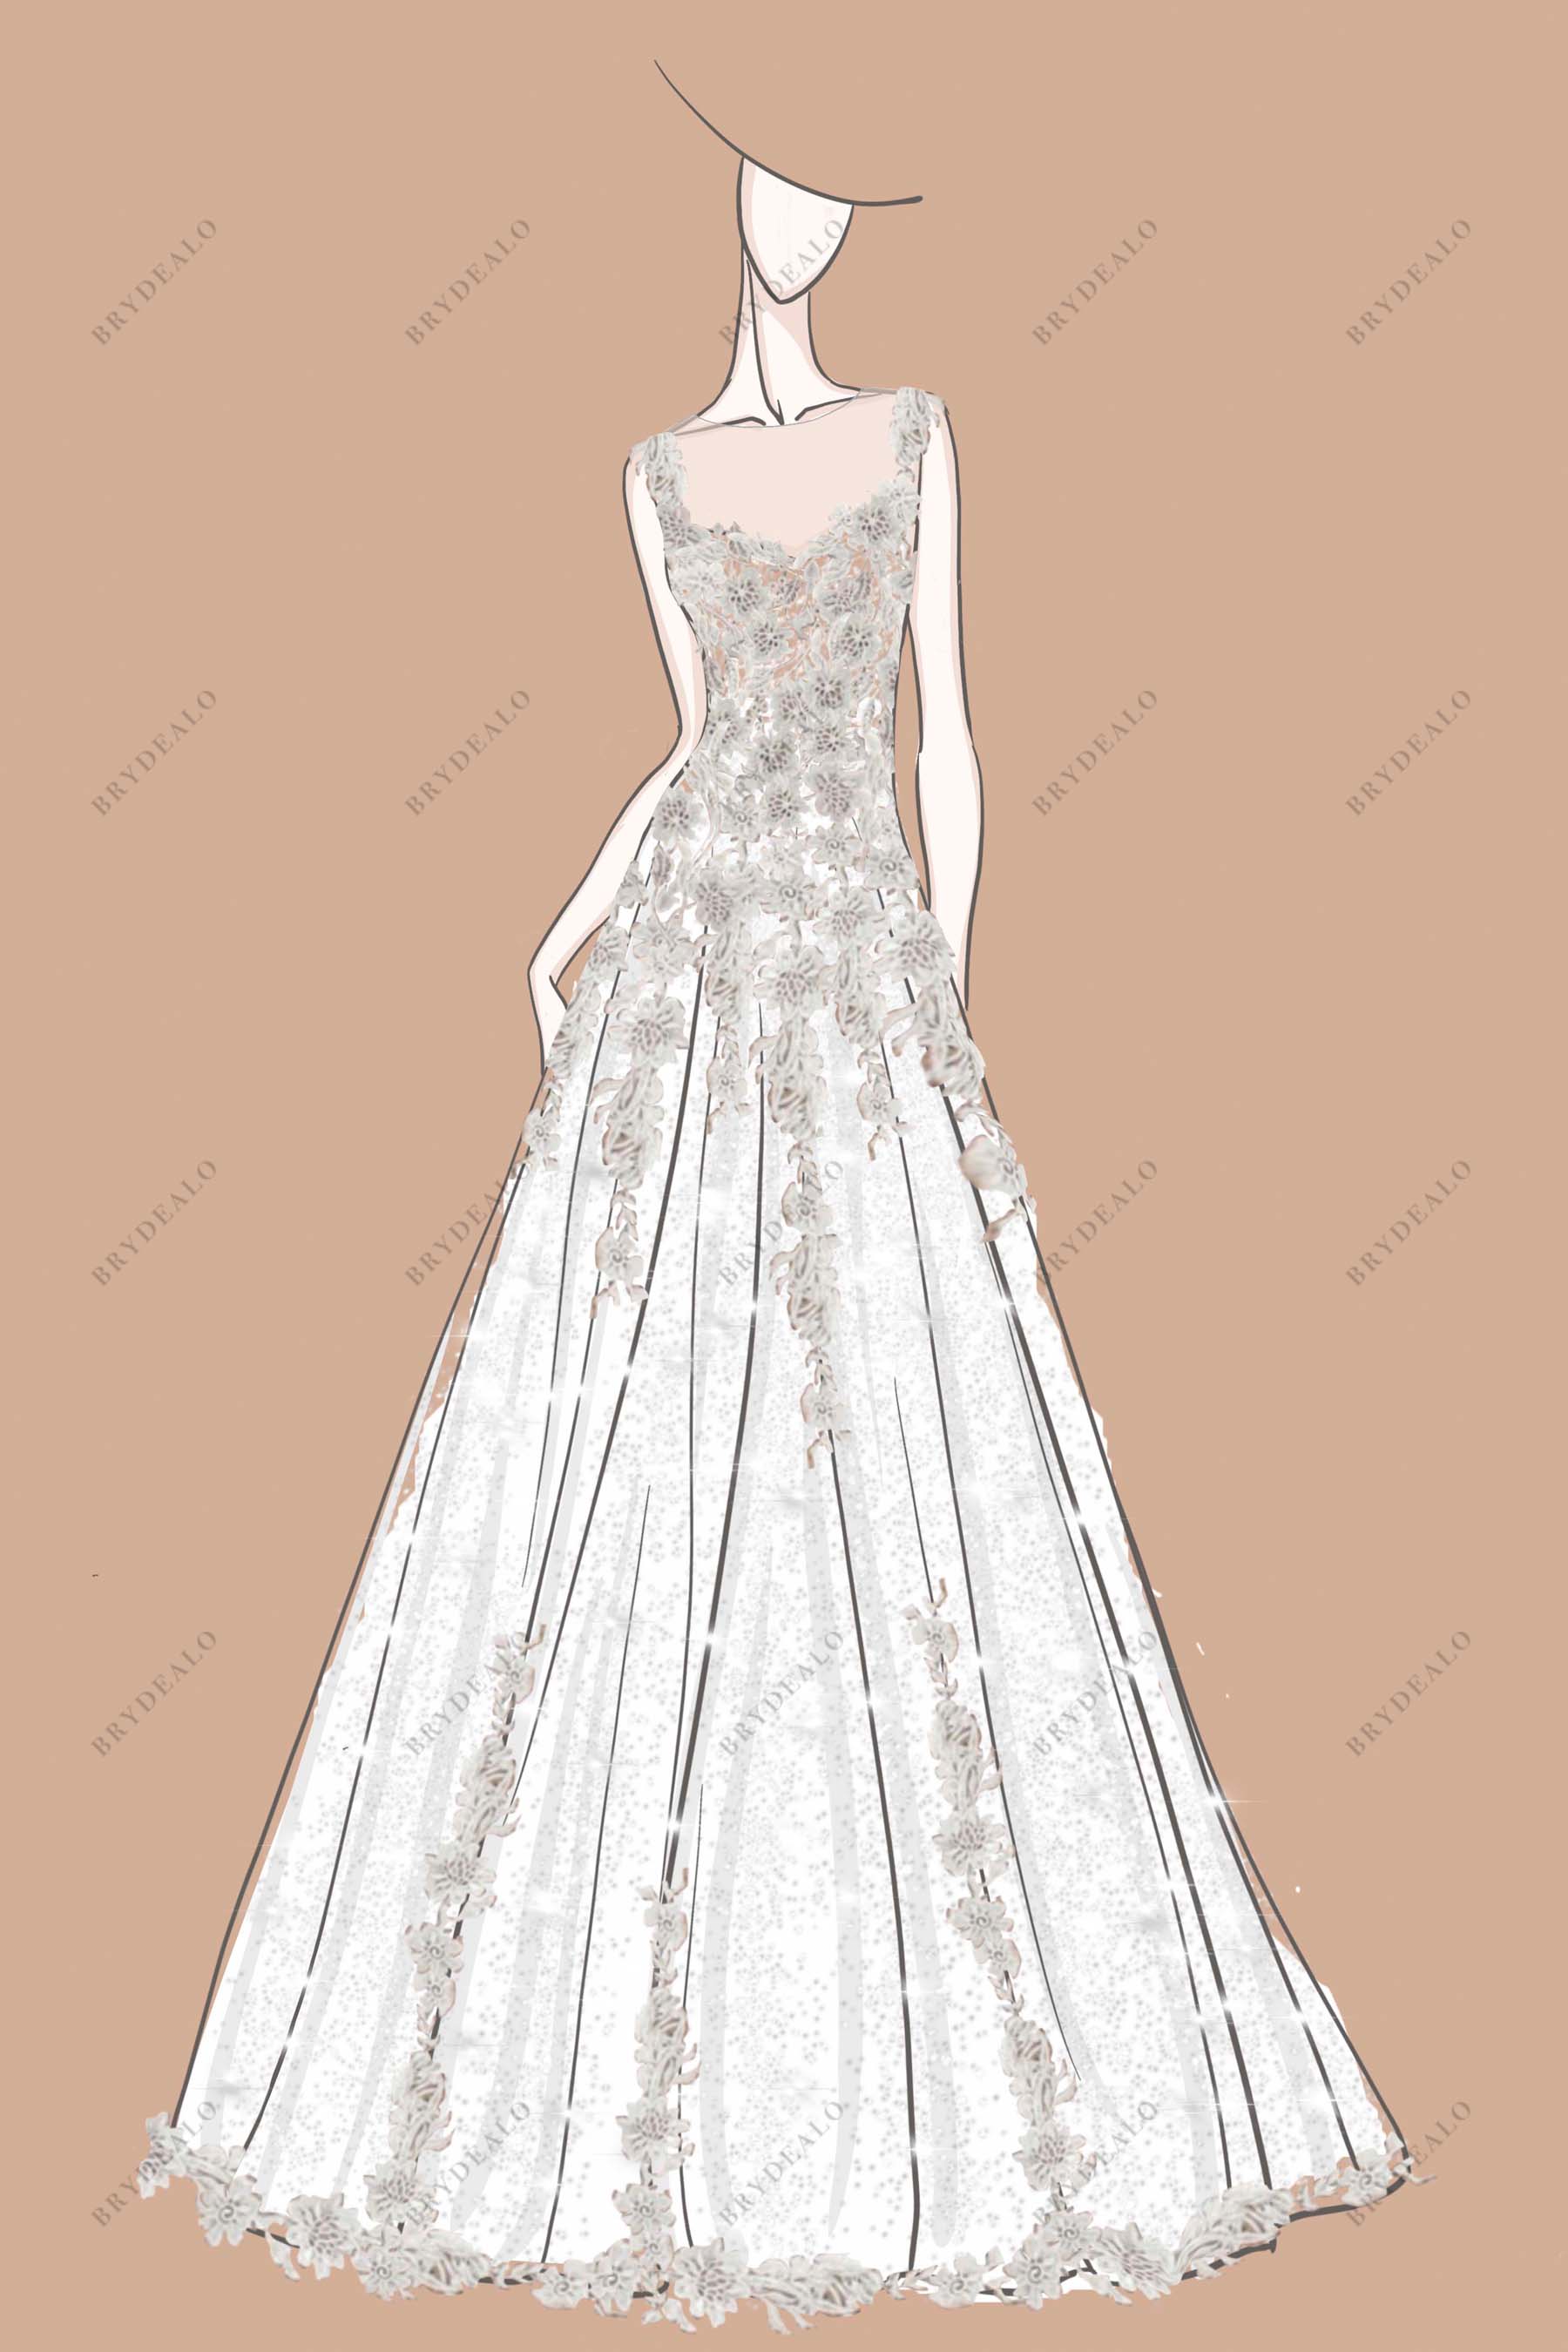 illusion neck lace A-line bridal gown sketch